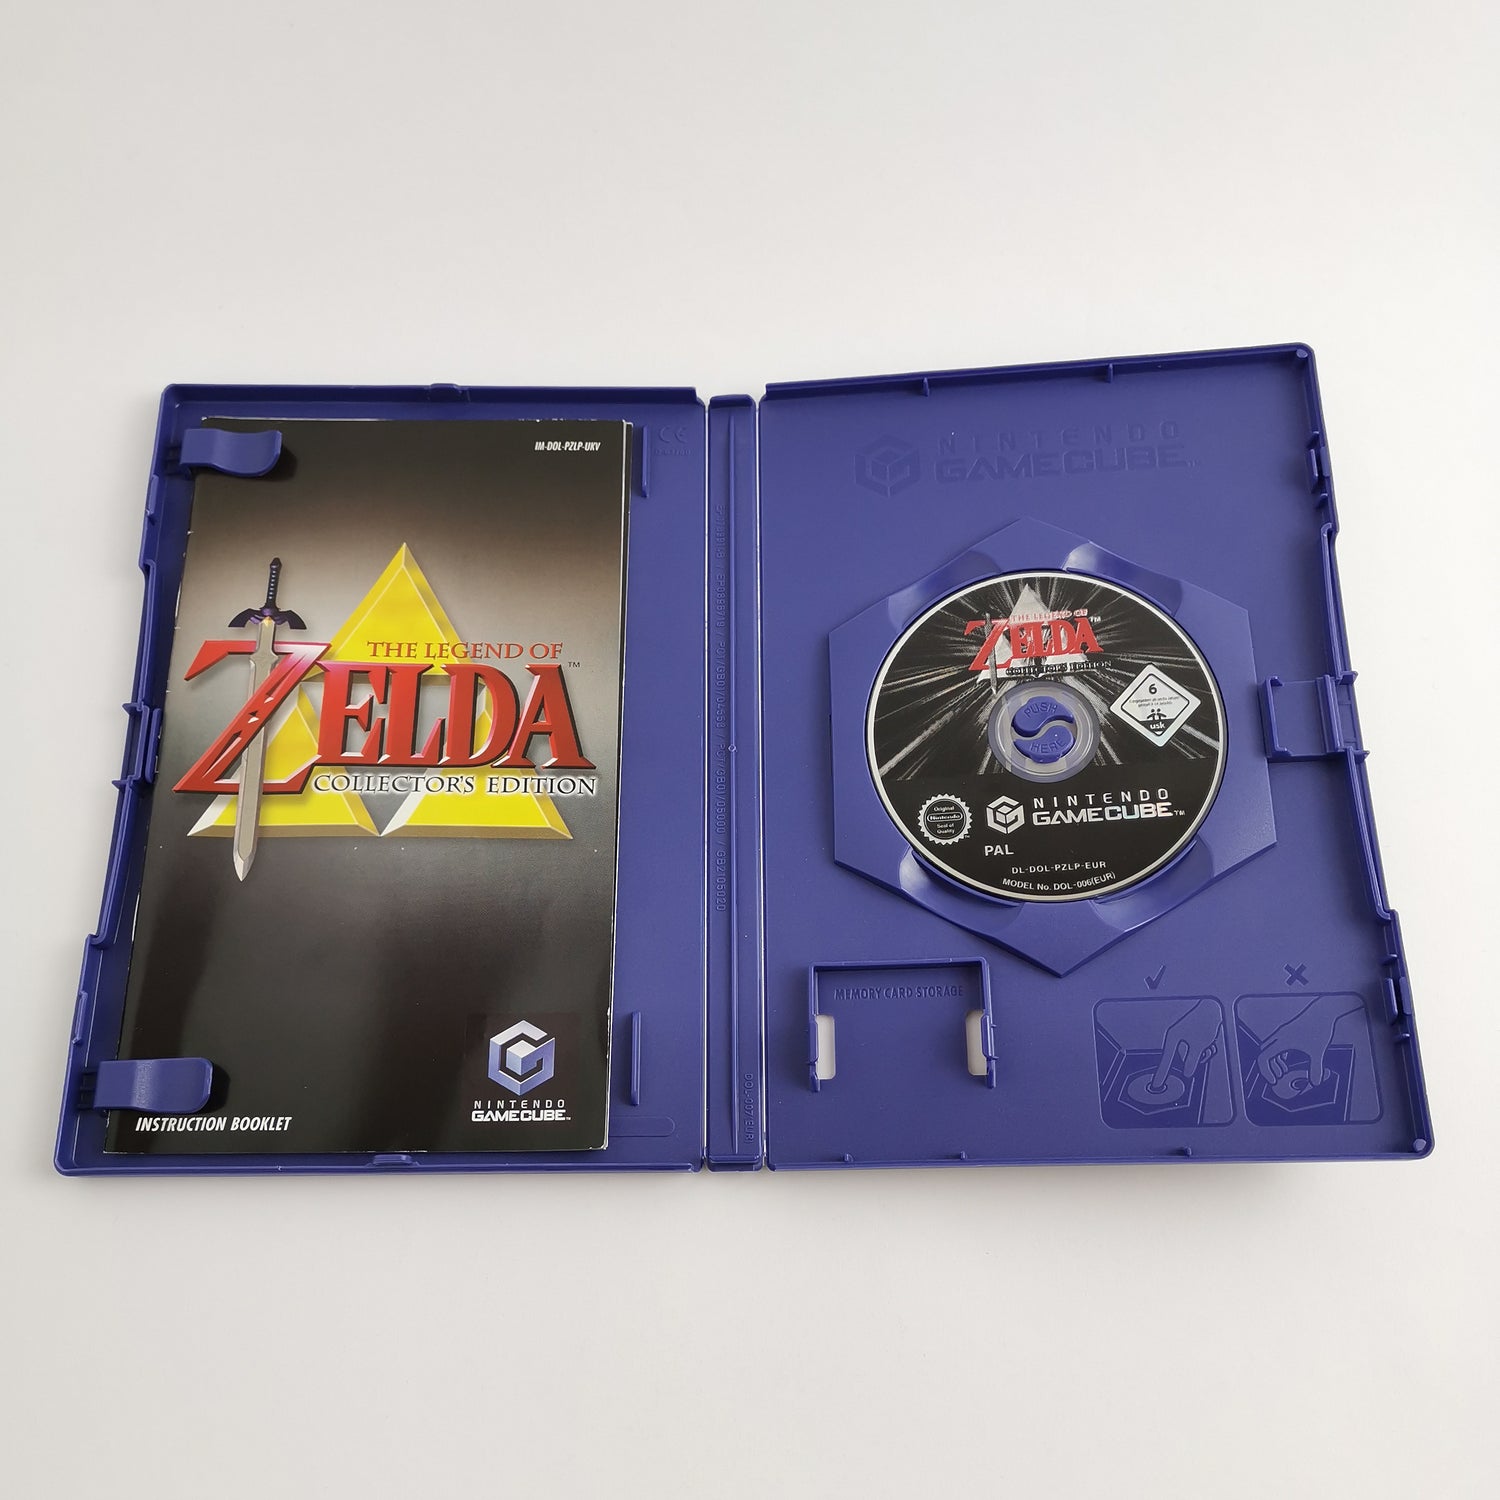 Nintendo Gamecube game: The Legend of Zelda Collectors Edition - original packaging instructions